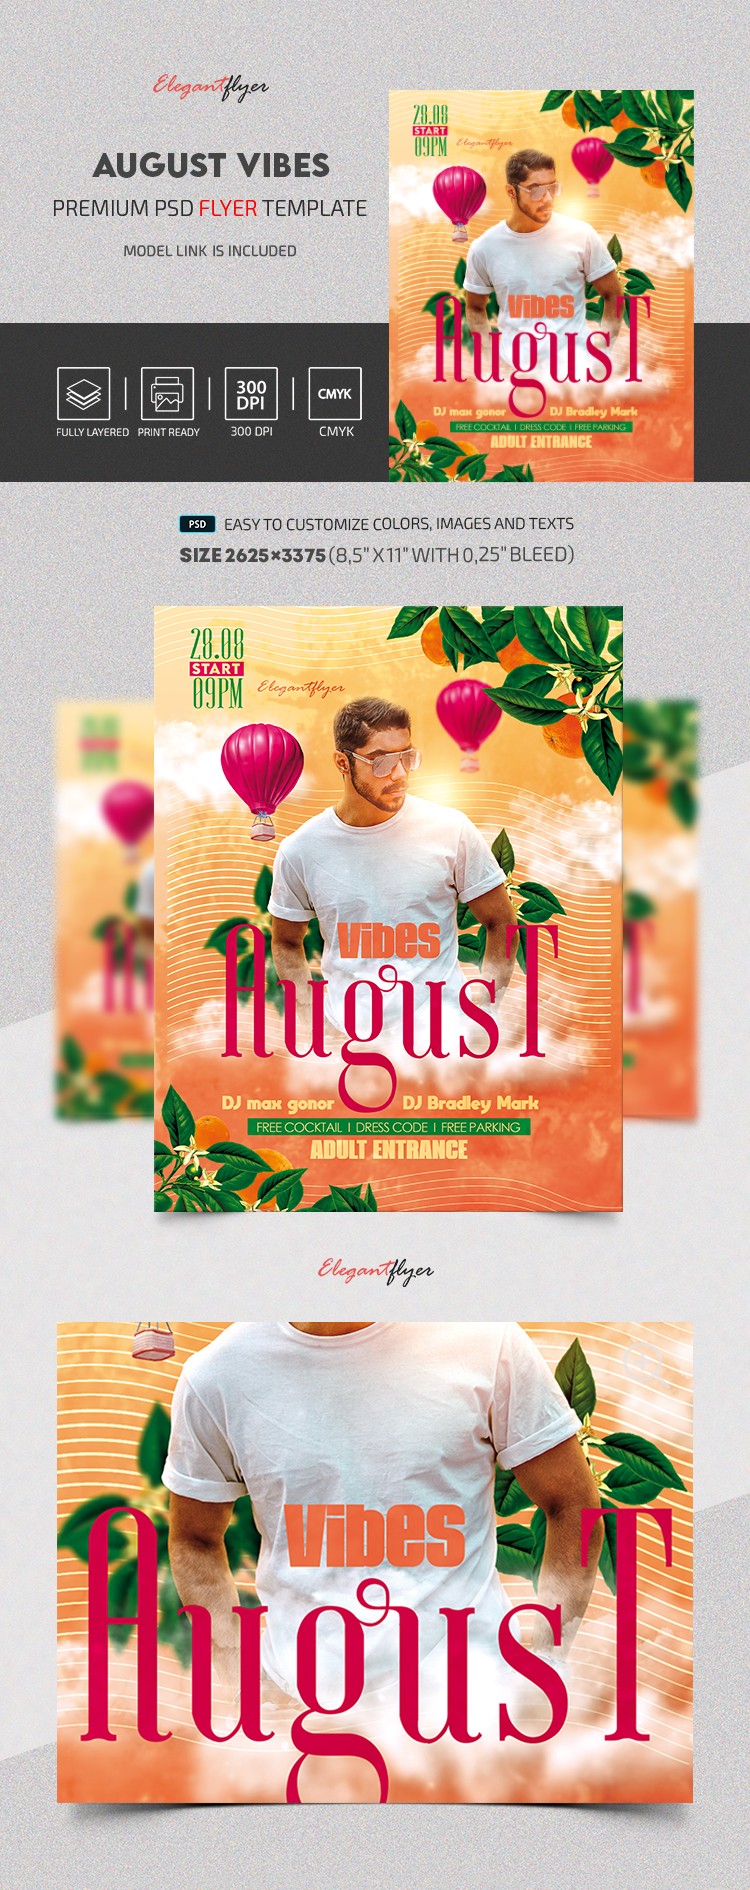 August Vibes Flyer by ElegantFlyer